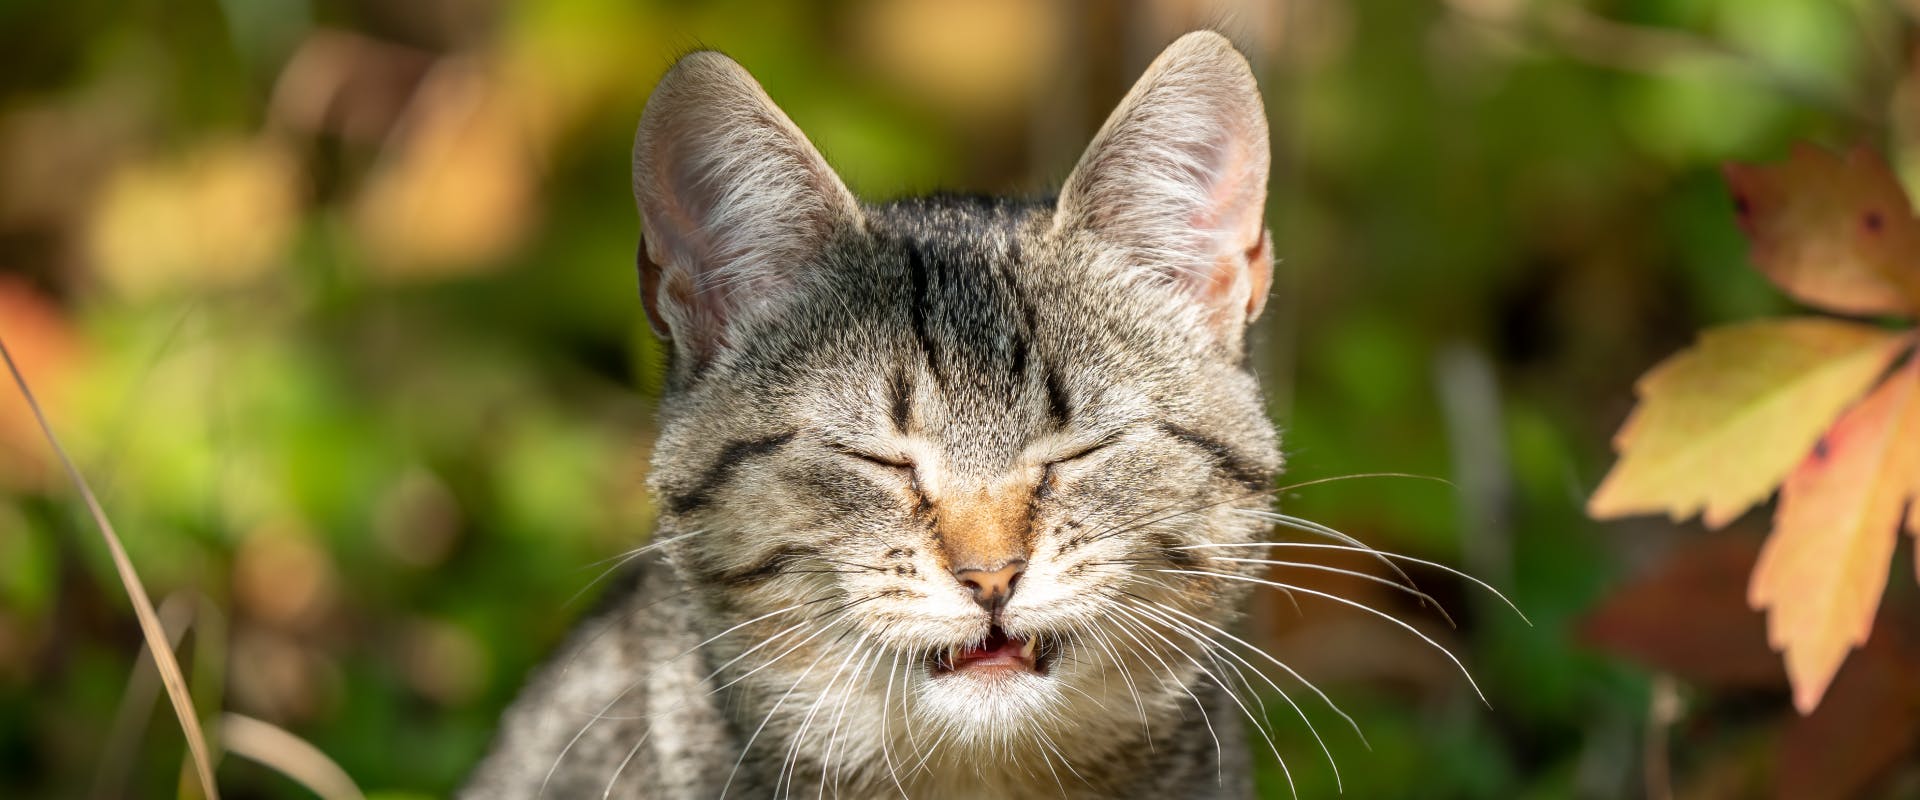 A cat sneezing.